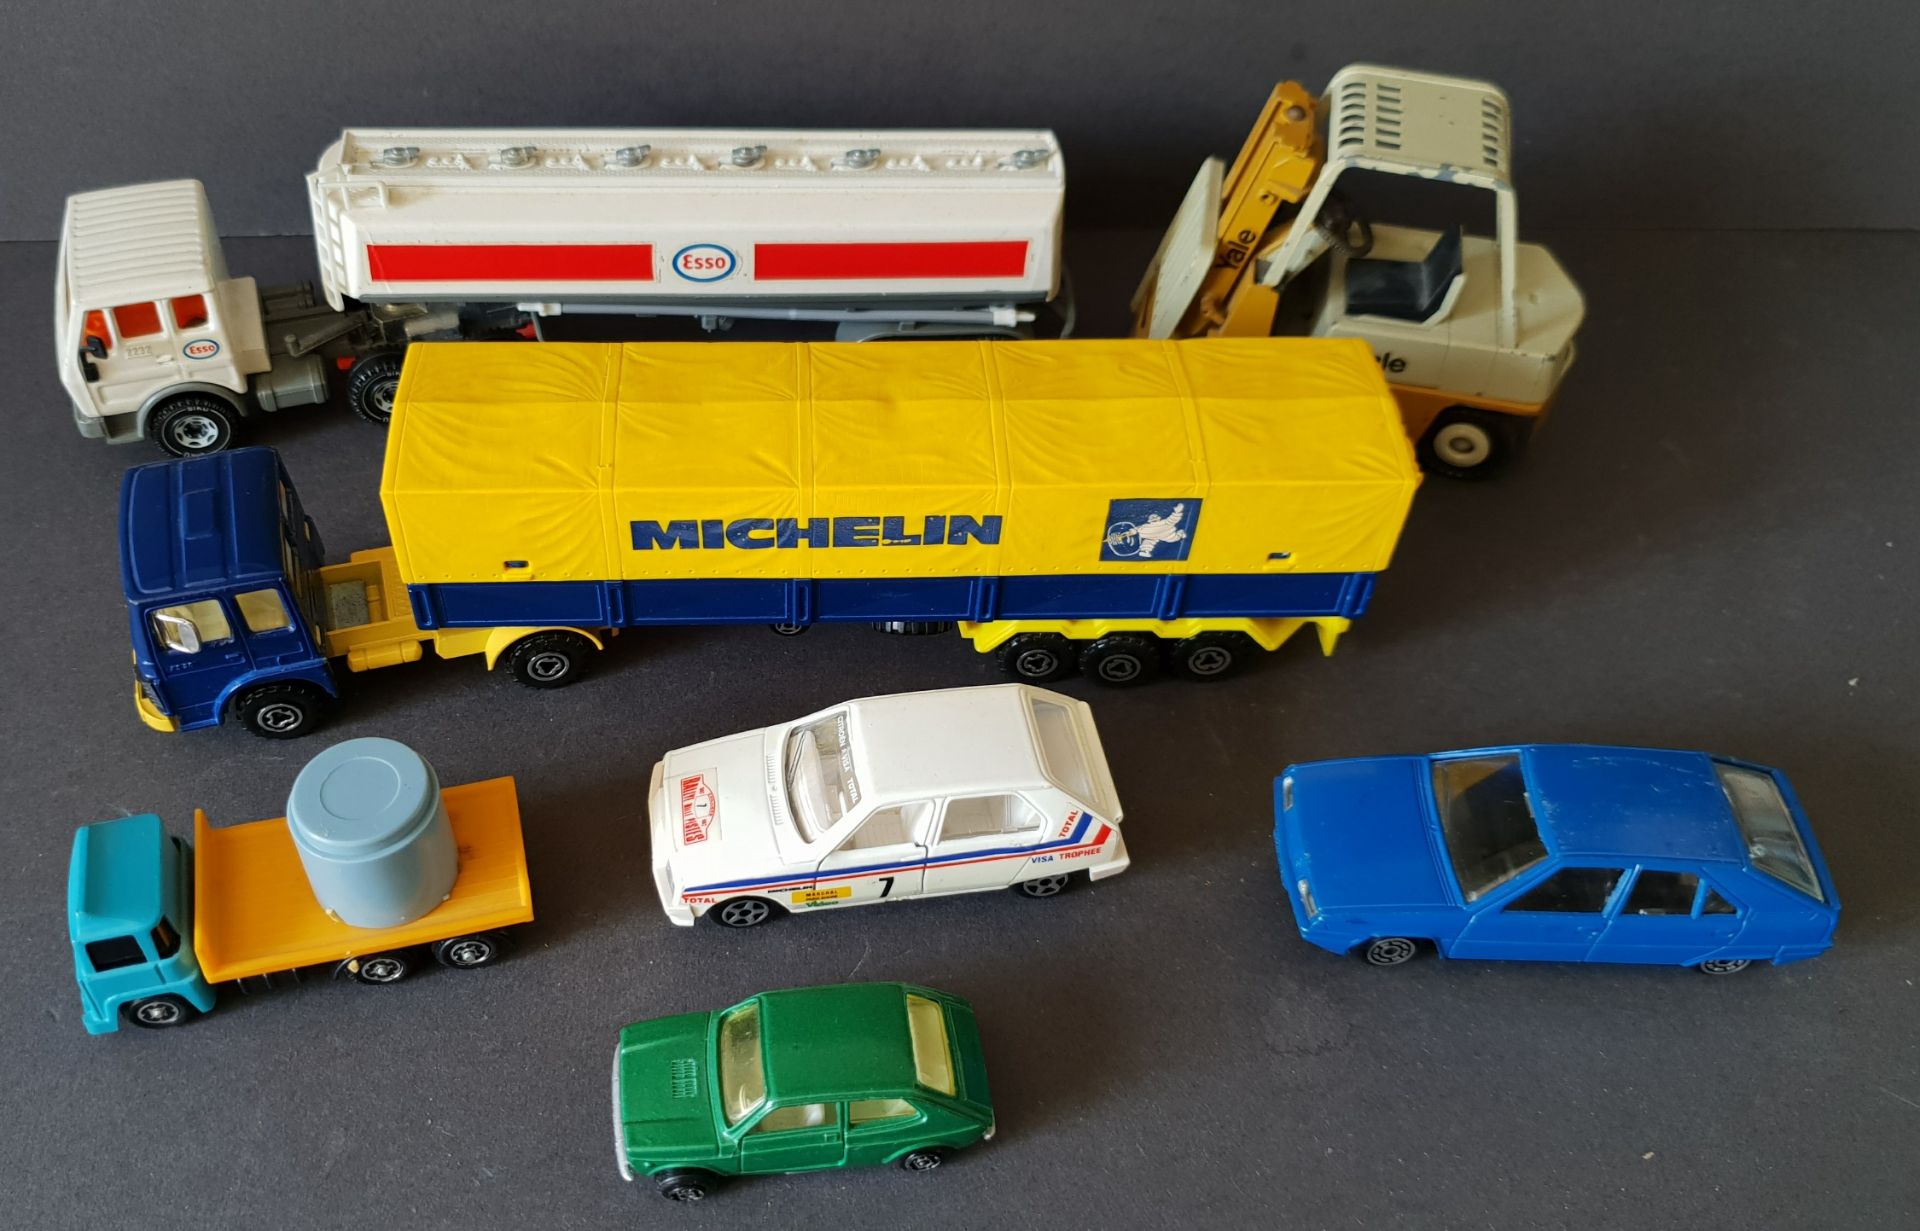 Vintage Collectable Die Cast Metal Toy Vehicles Various Makes Includes West German Fork Lift